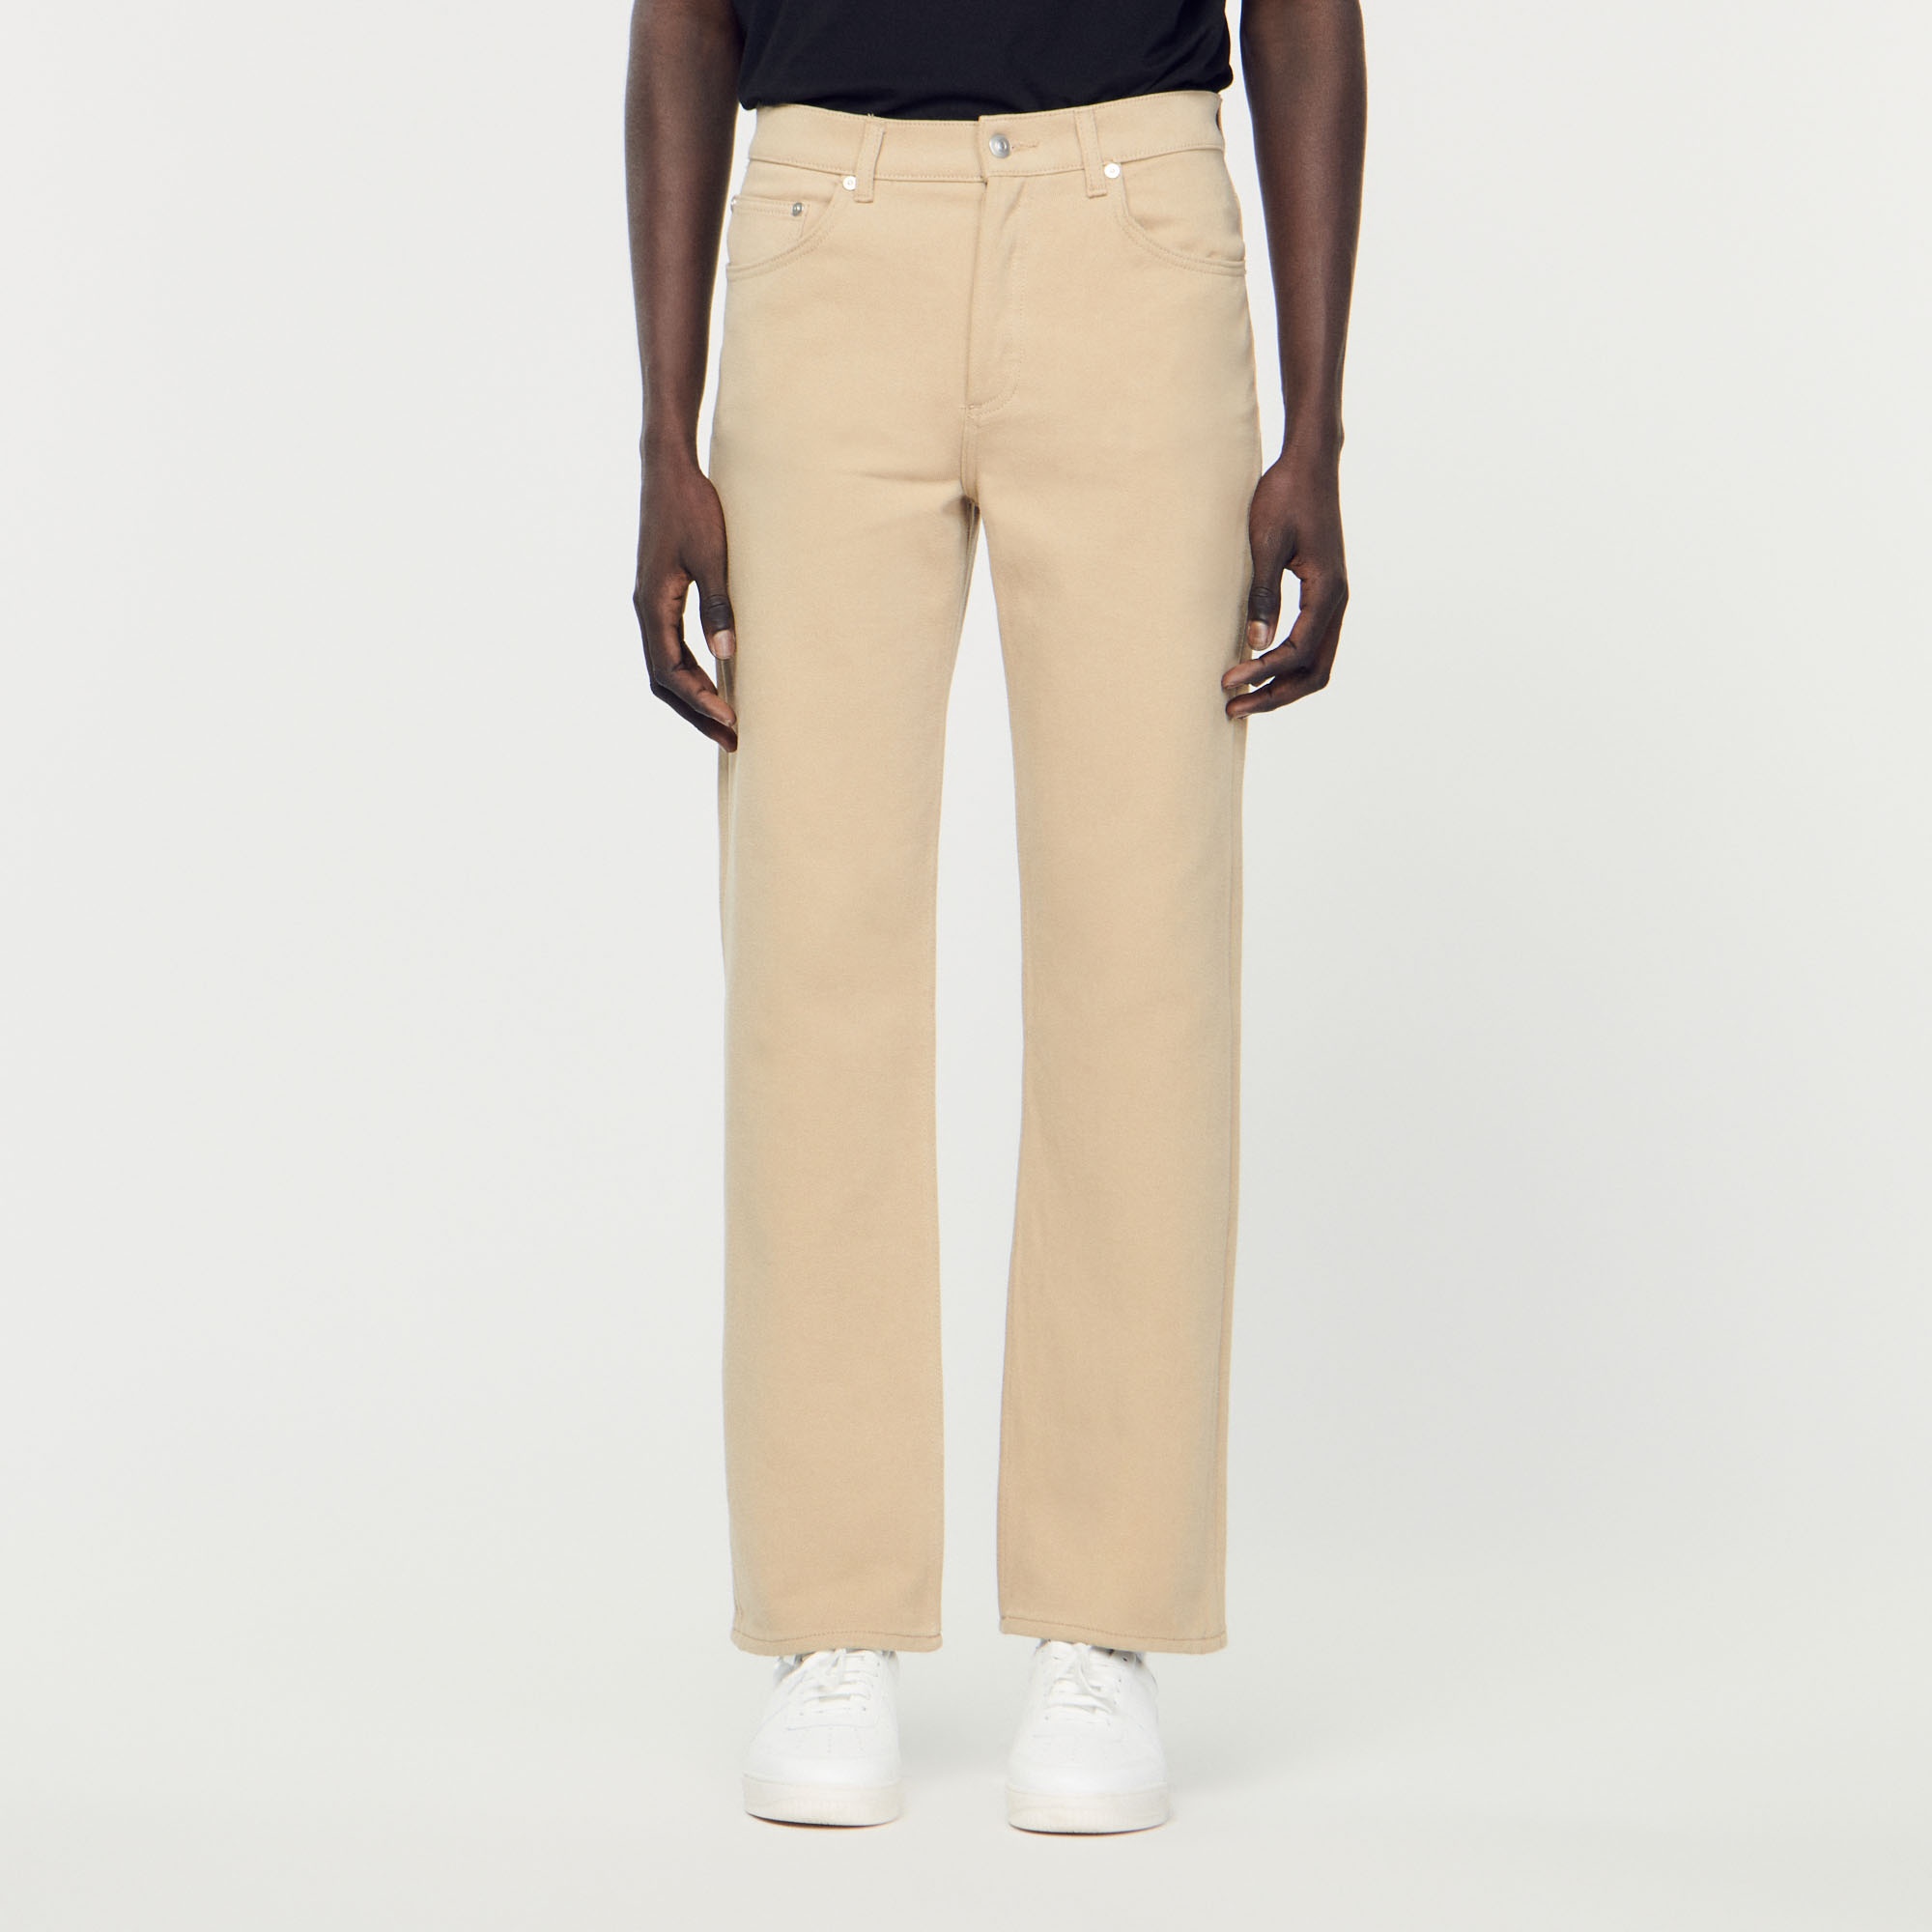 Straight cotton jeans - 5